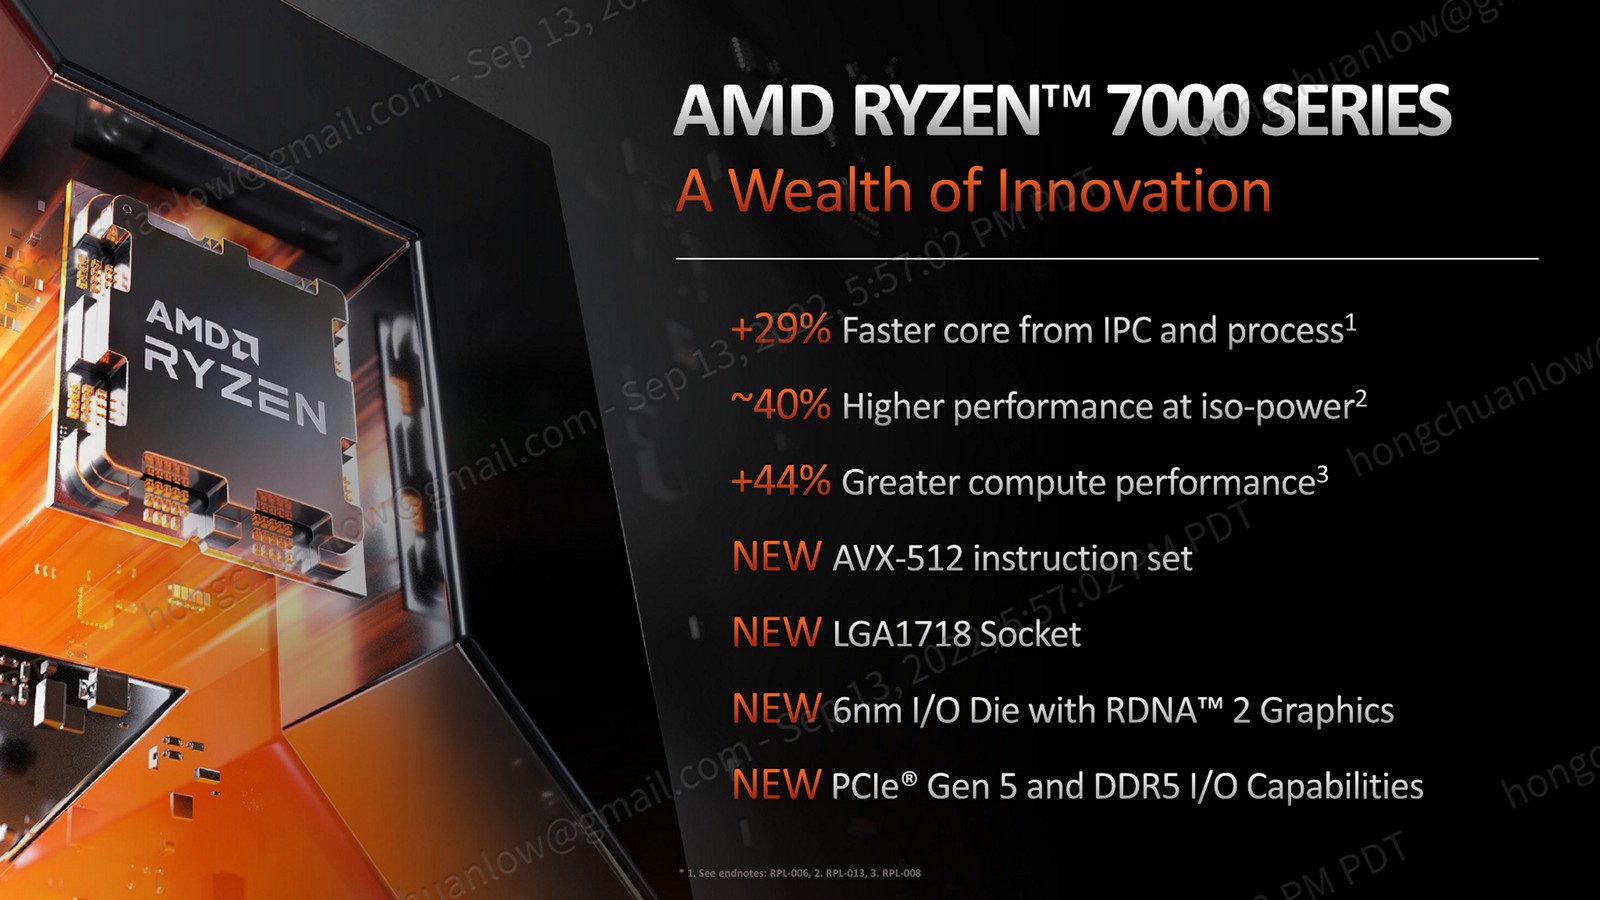 amd ryzen 7000 series a wealth of innovation